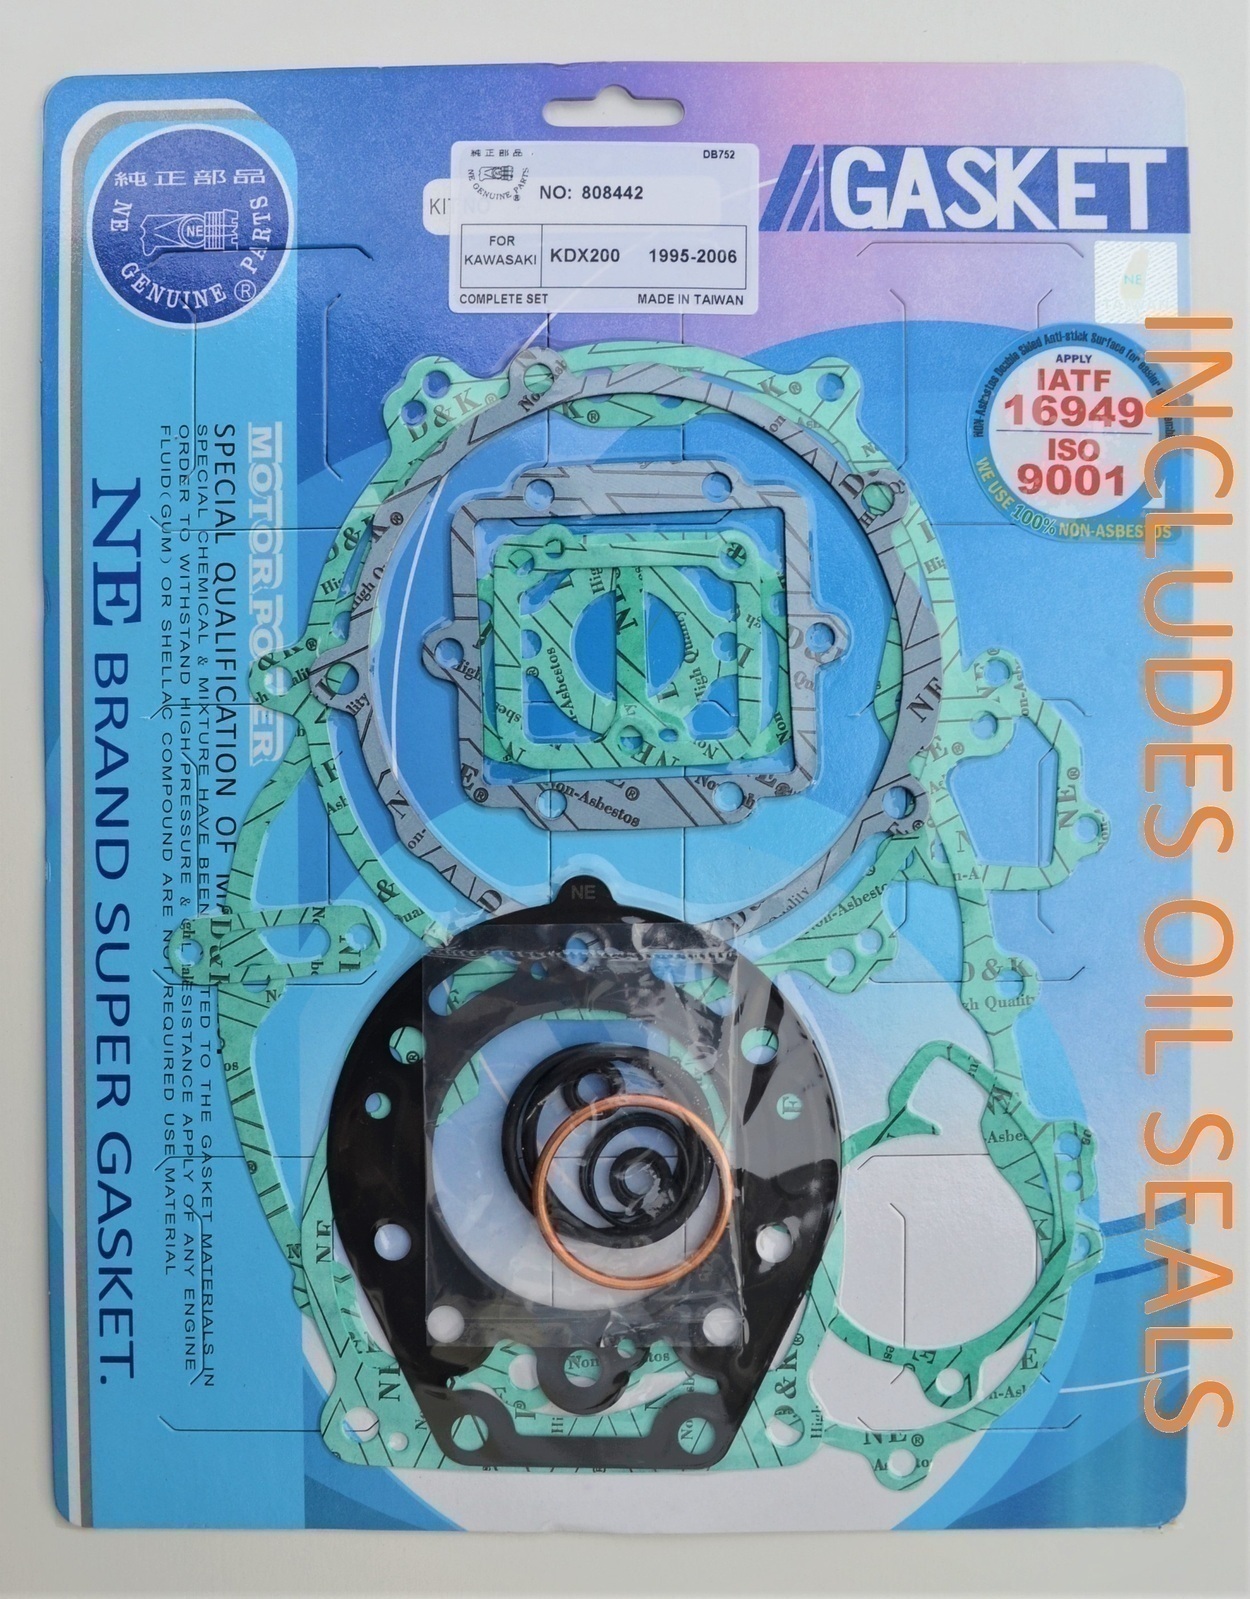 COMPLETE GASKET & OIL SEAL KIT FOR KAWASAKI KDX200 1995 - 2006